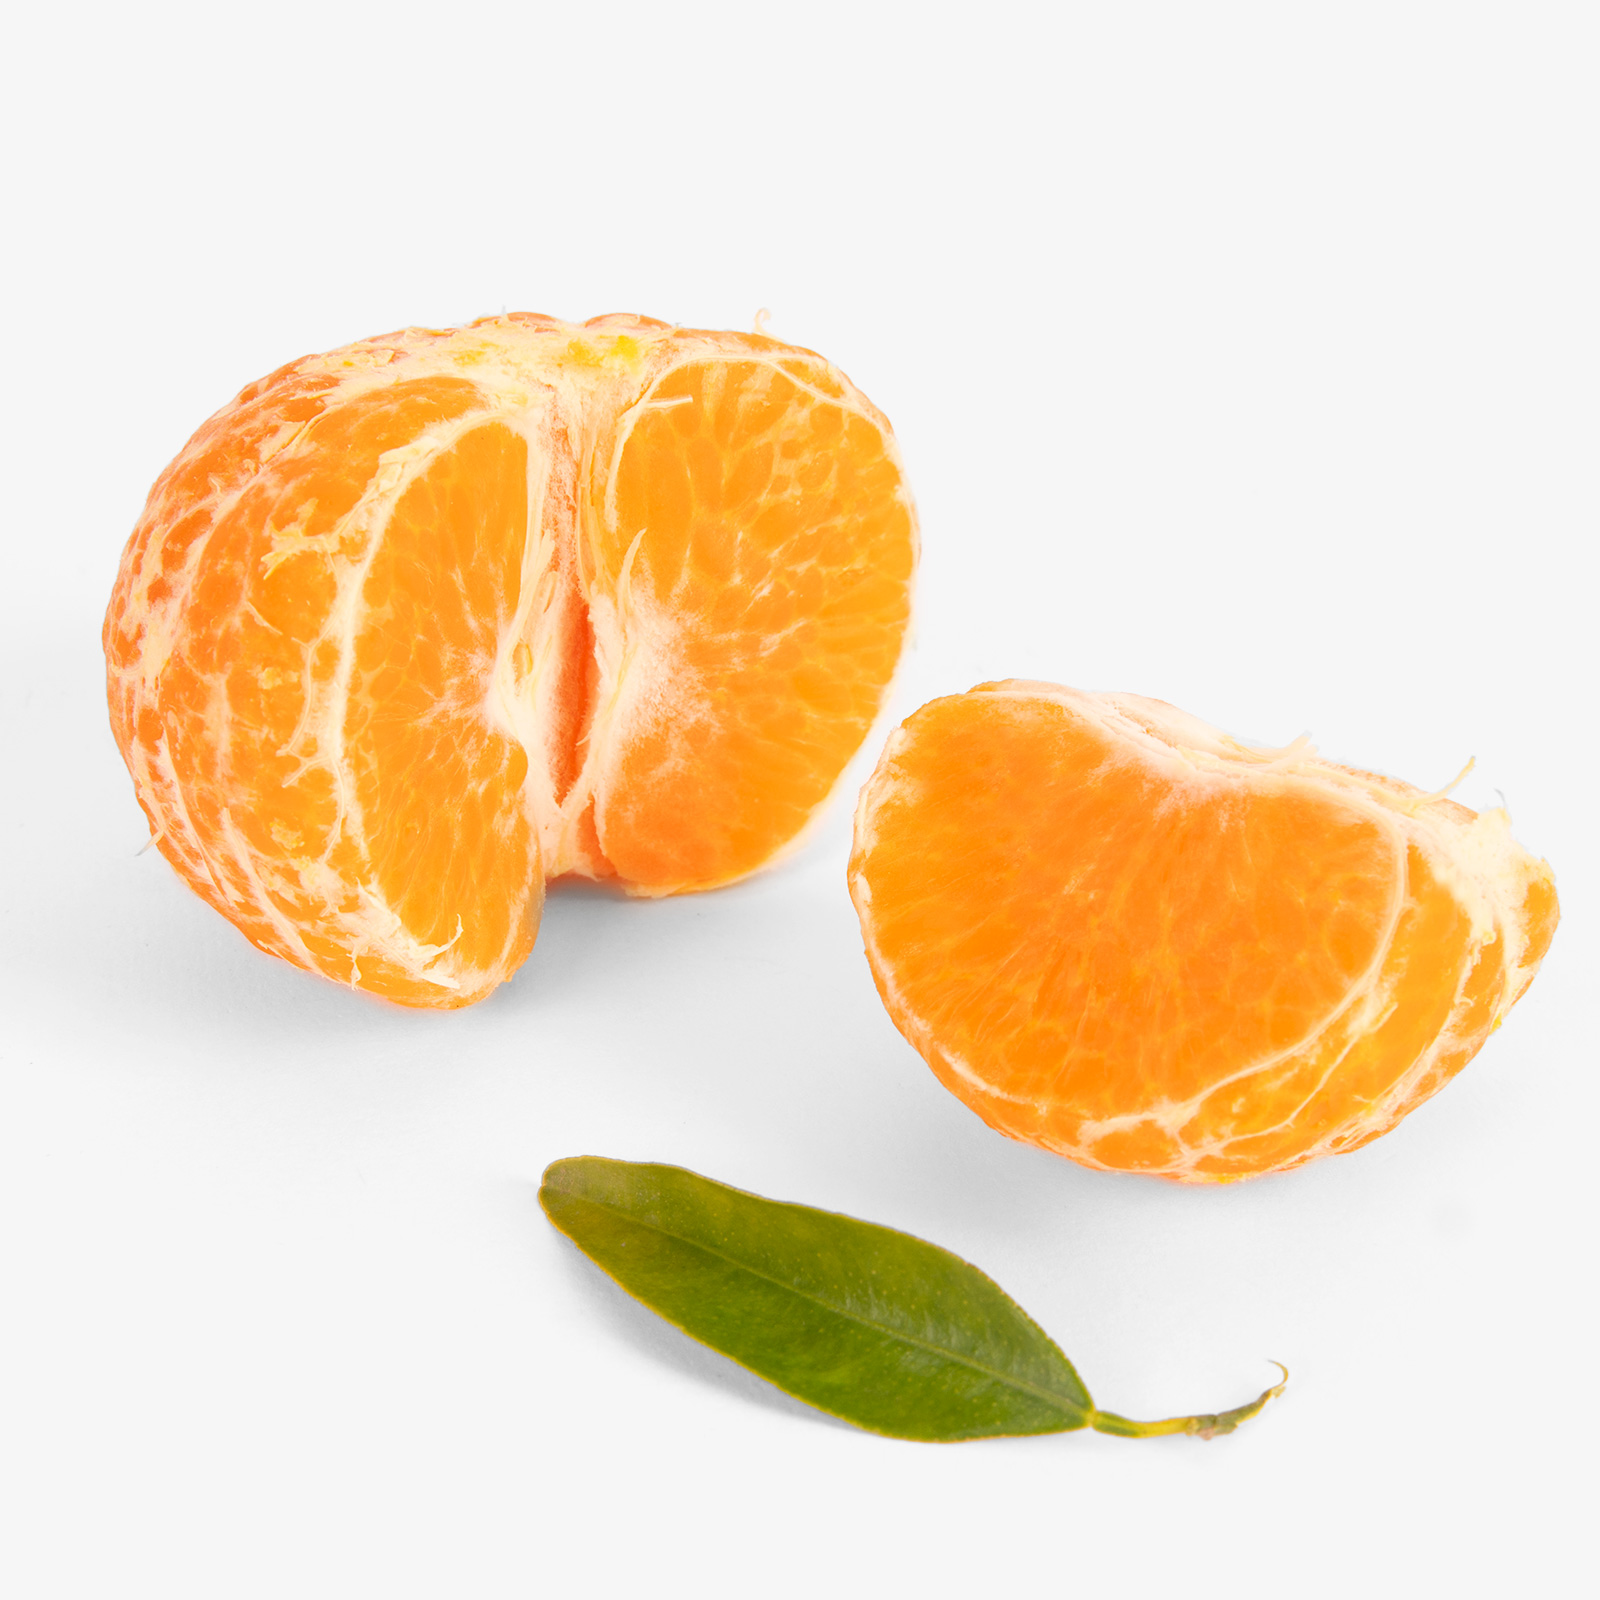 Comprar mandarinas spirng sunshine online